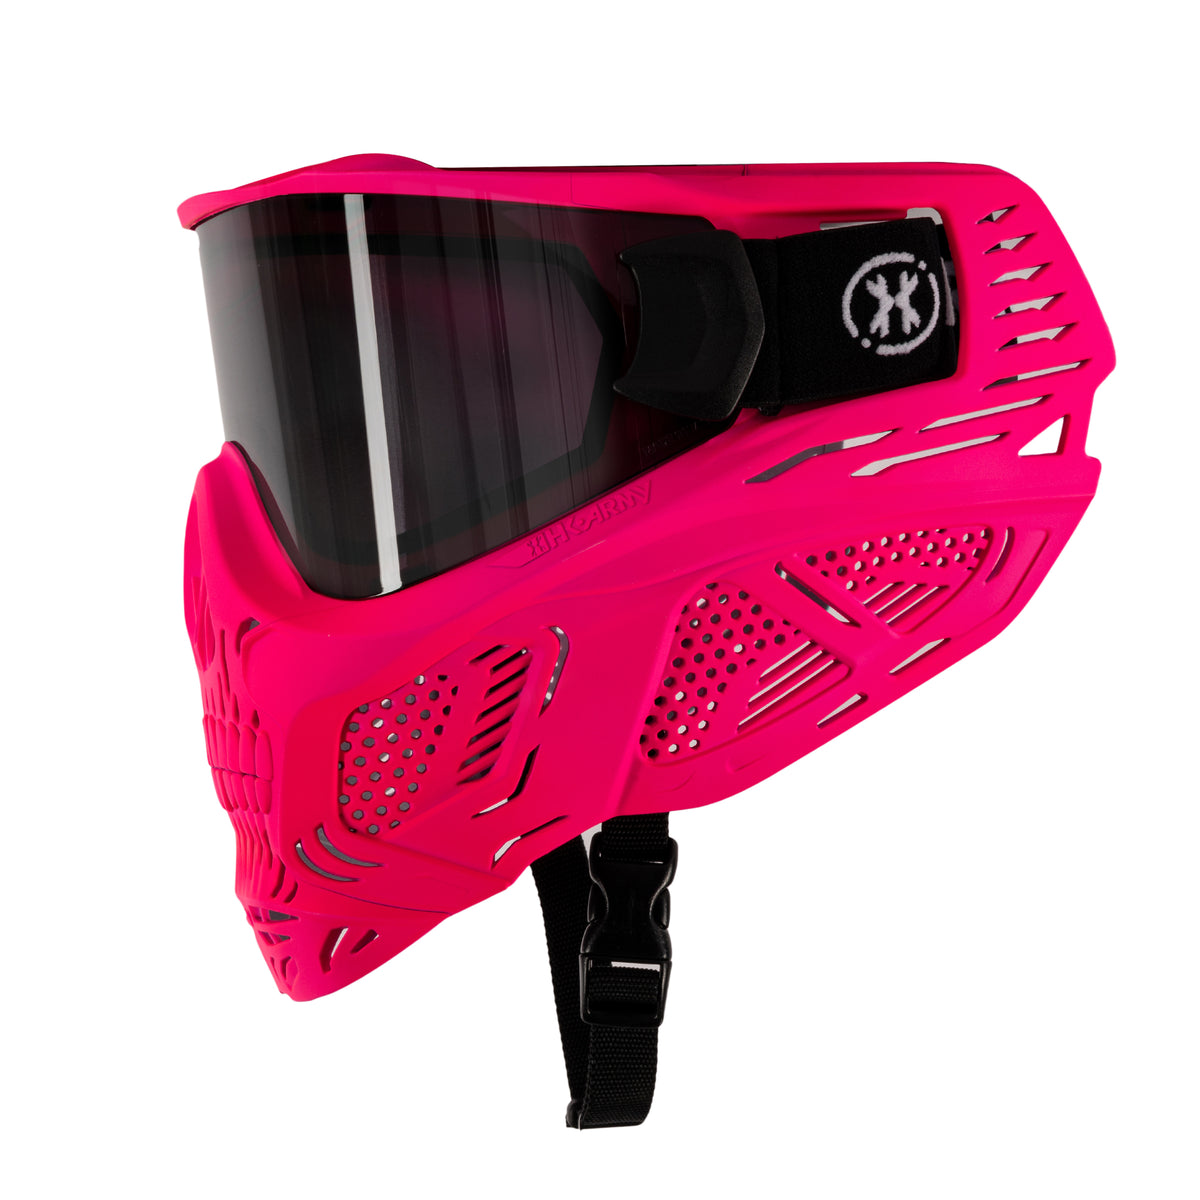 HSTL Skull Goggle "Neon Pink" - W/ Smoke Lens | Paintball Goggle | Mask | Hk Army